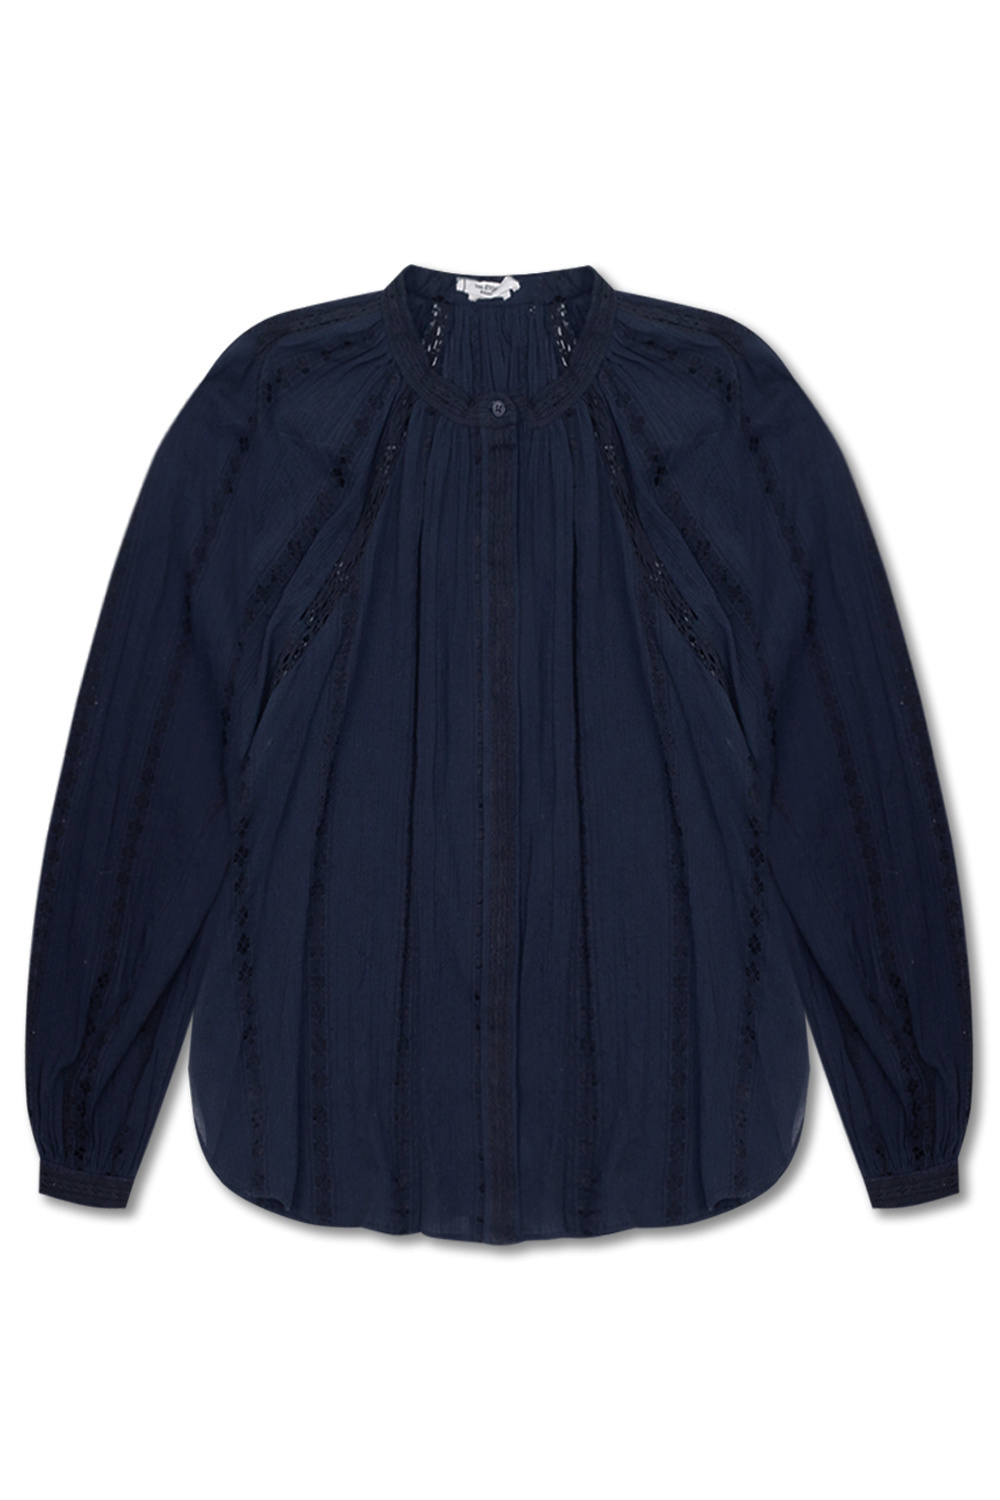 fringe-detail long-sleeve sweatshirt ‘Janelle’ top